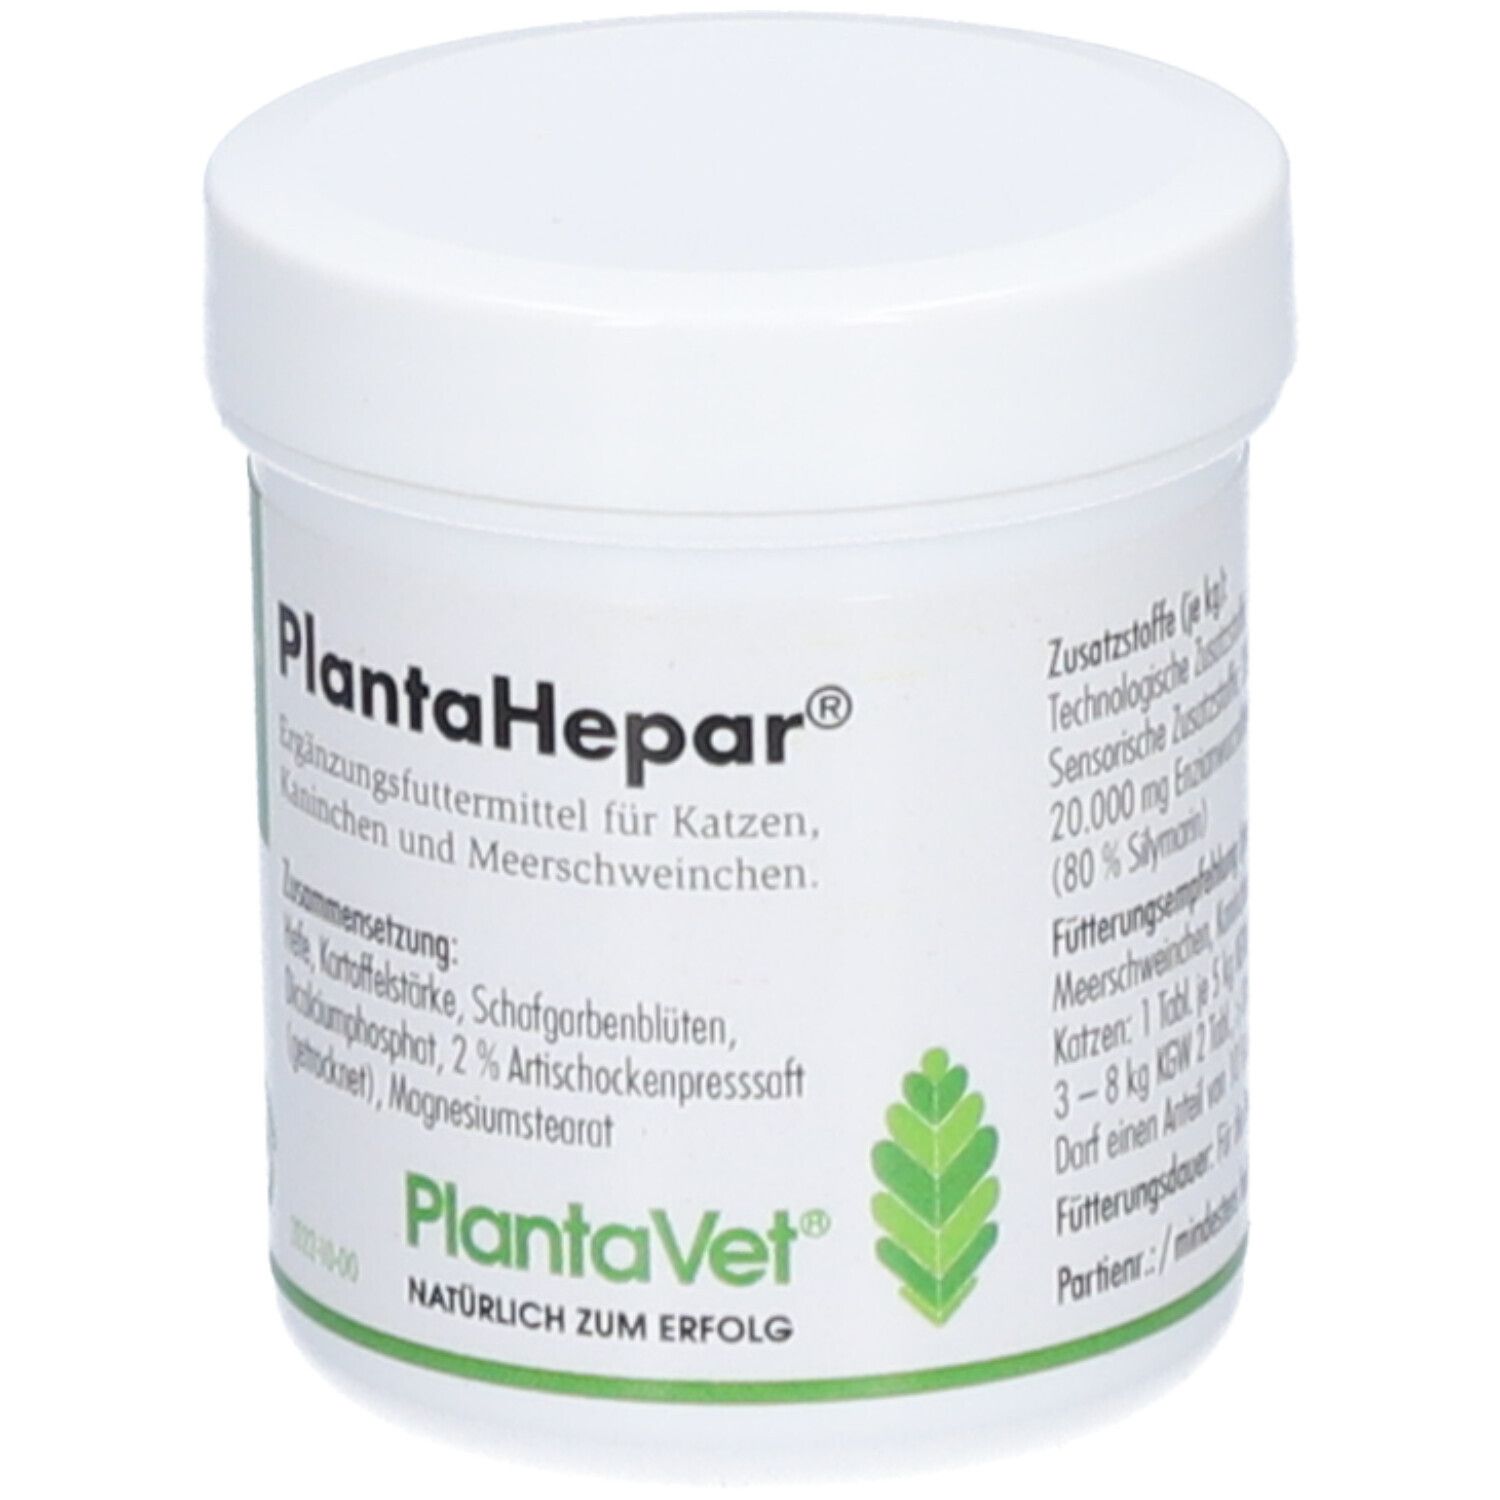 PlantaHepar®